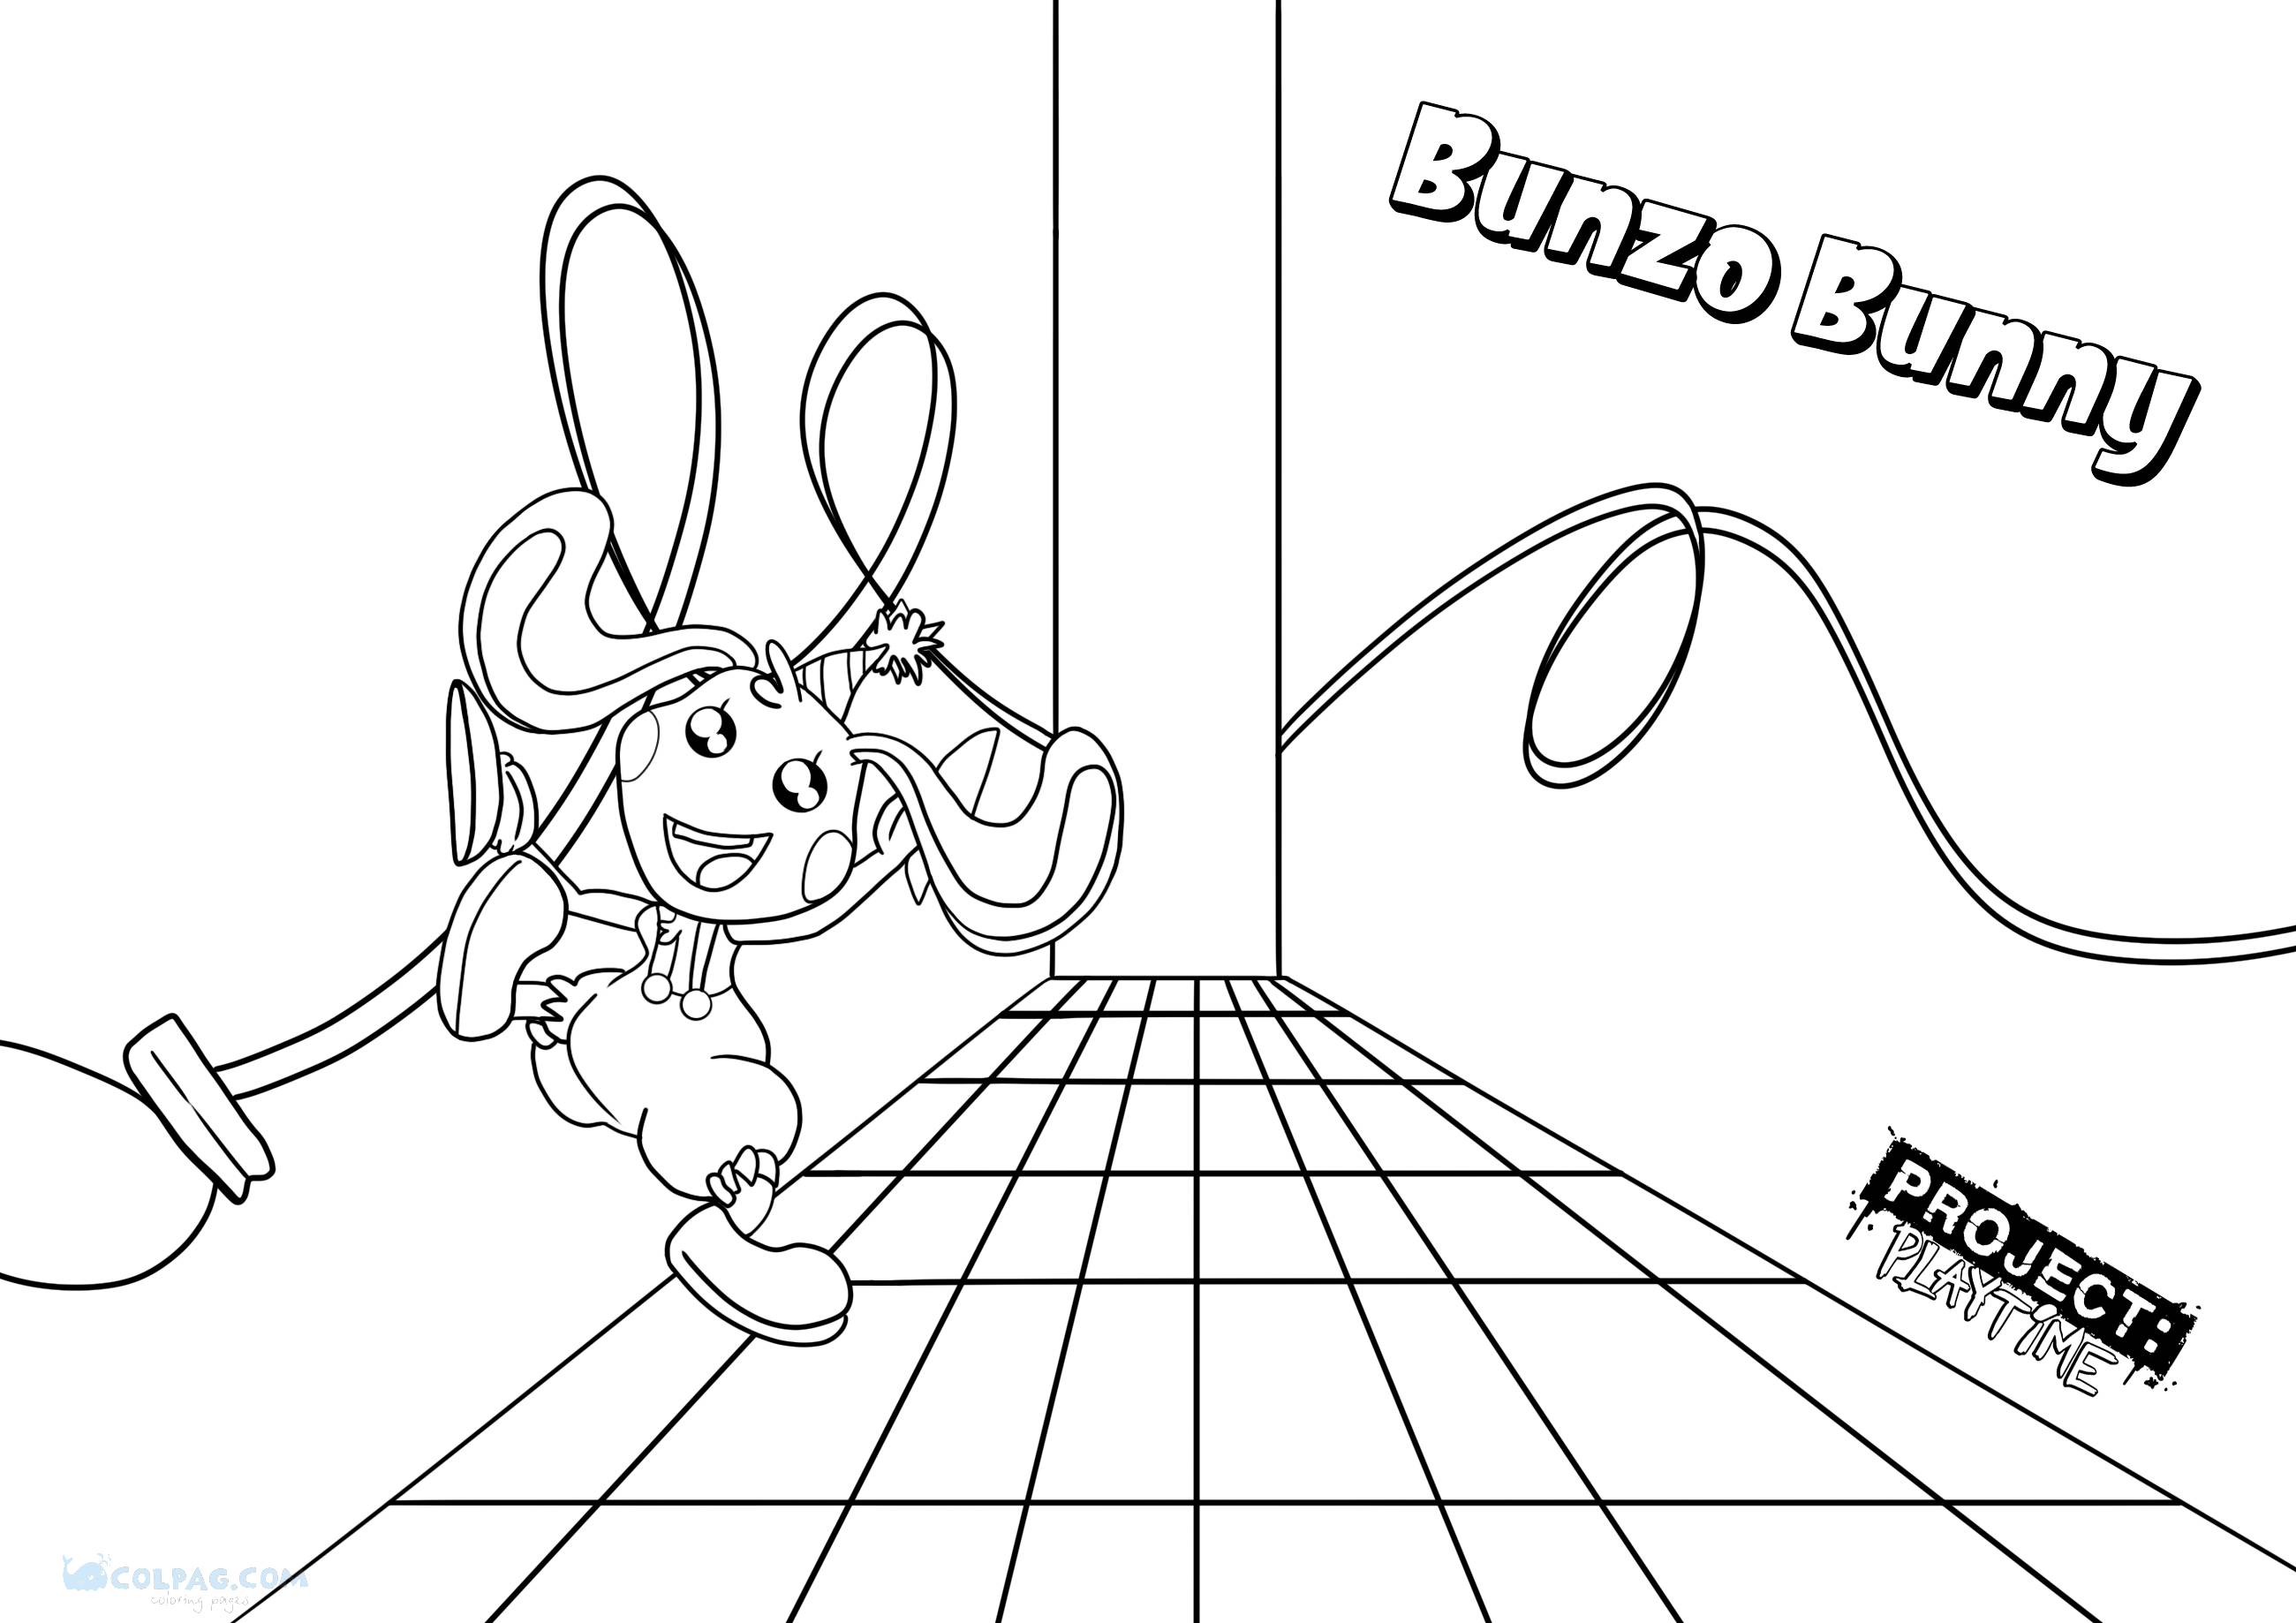 bunzo-bunny-coloring-page-colpag-com-7